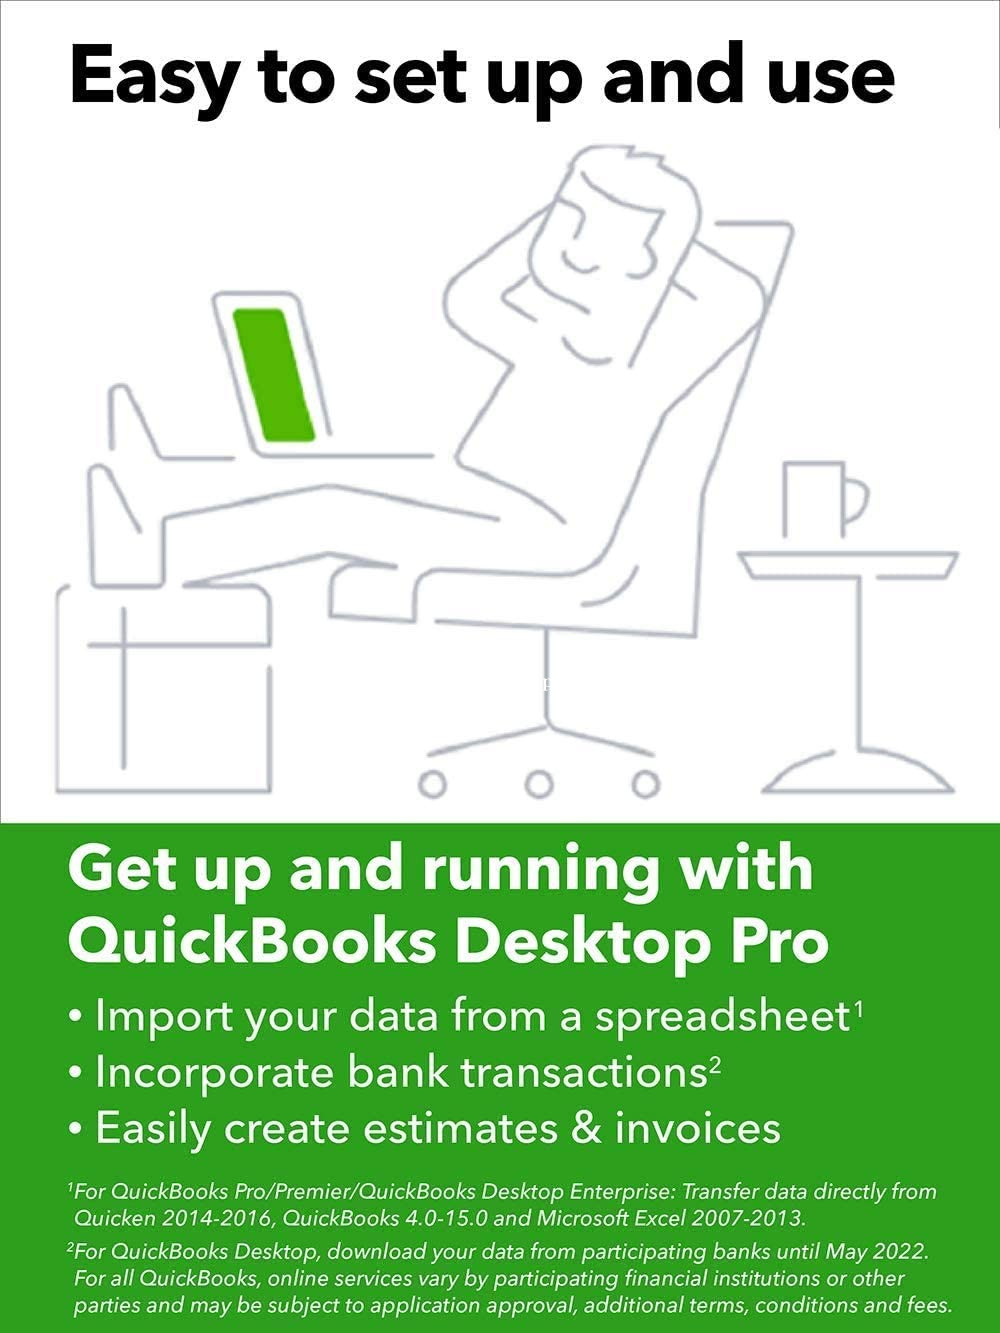 quickbooks proo for mac